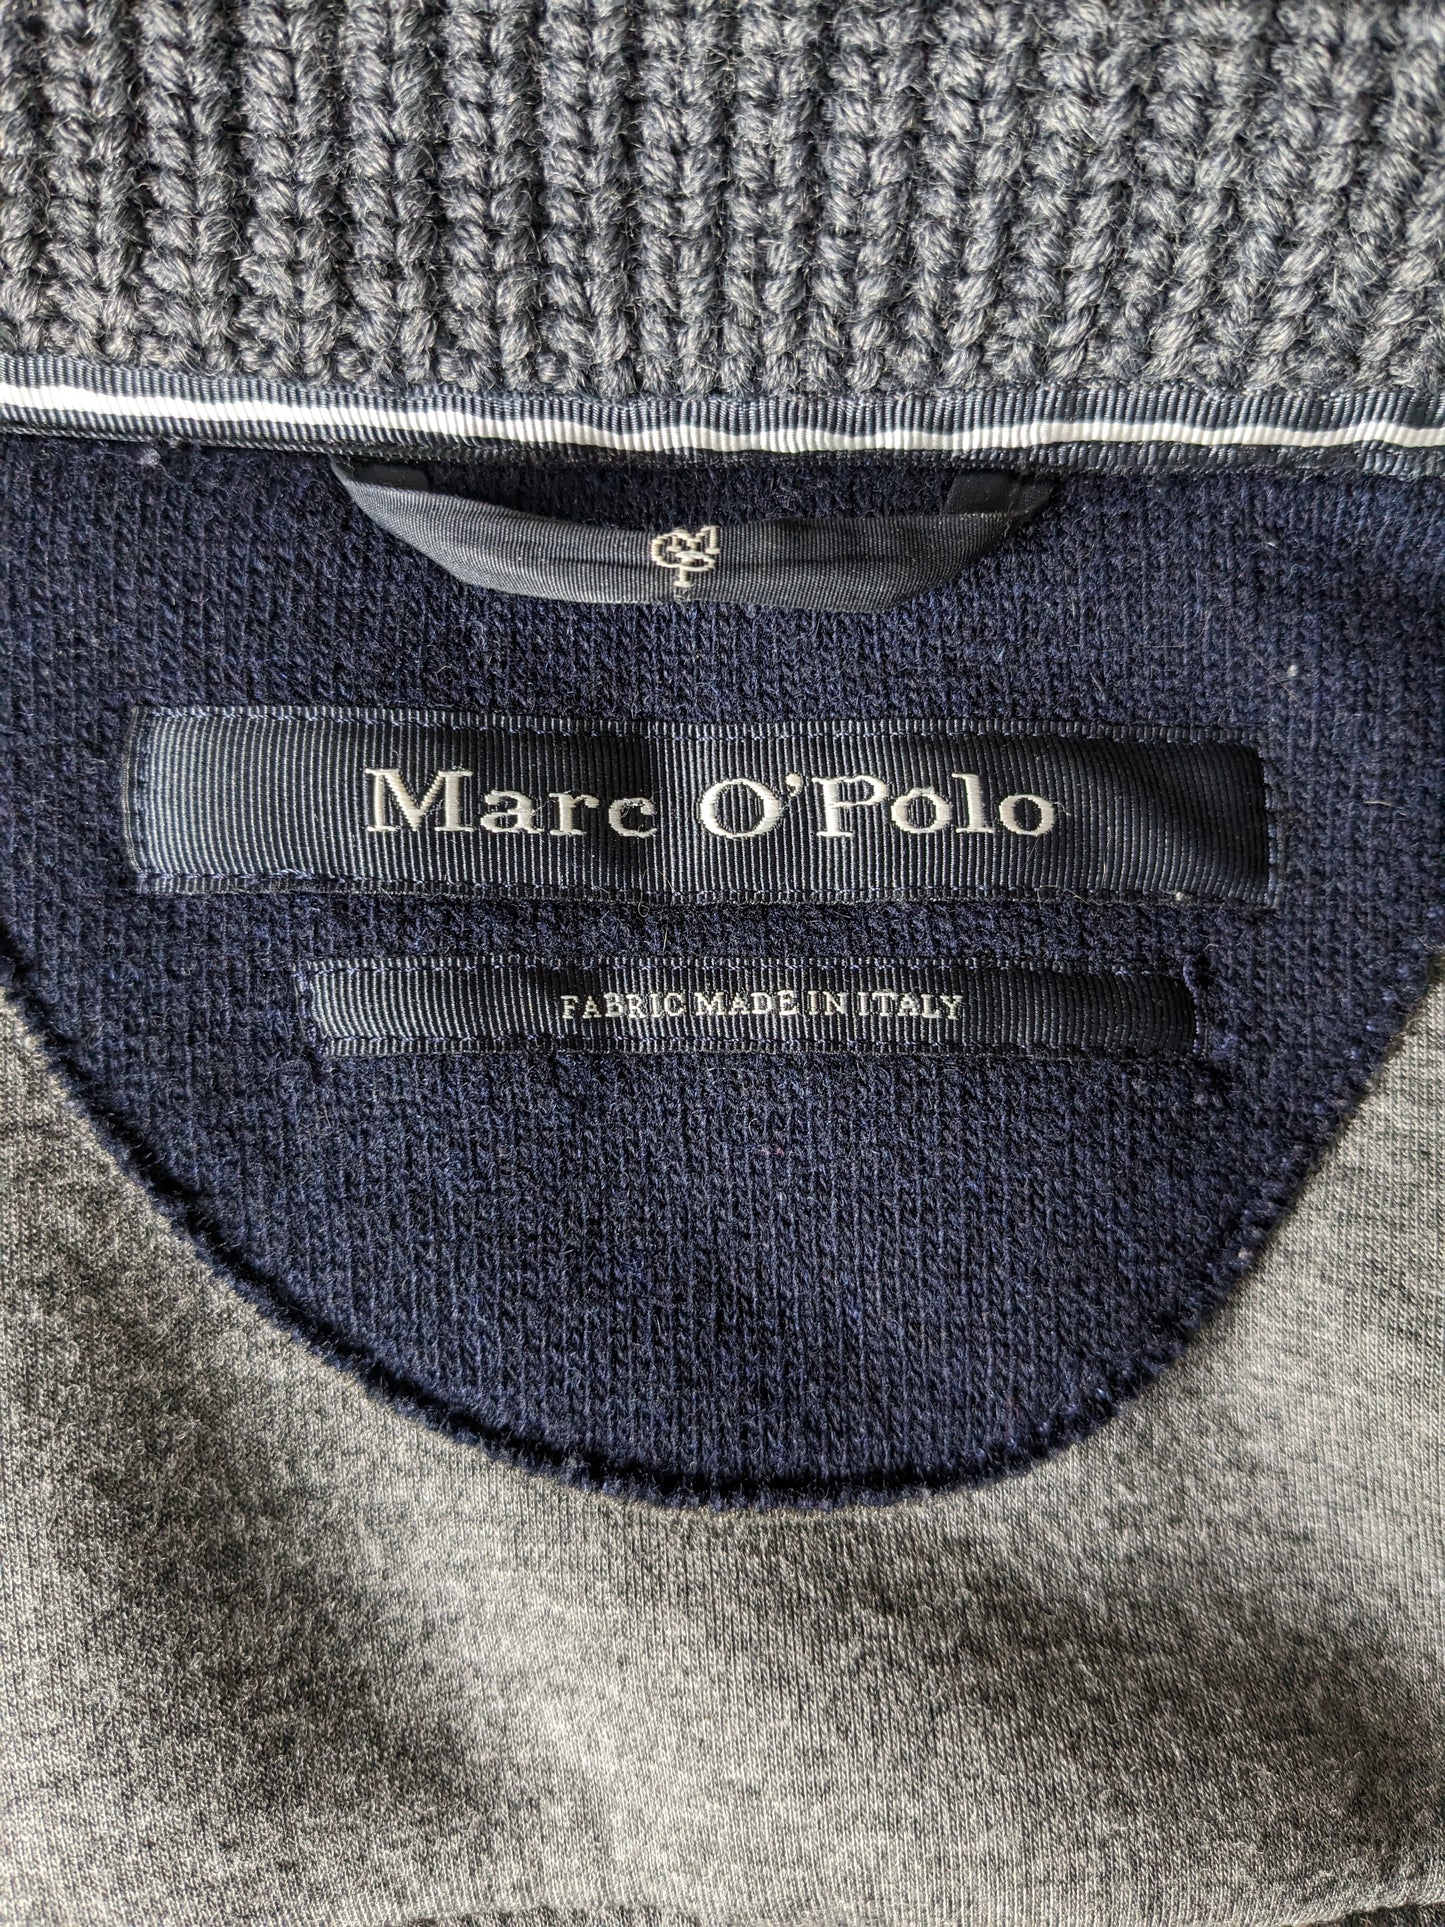 MARC O'POLO LOOL CHAK -LENTITA. Color gris azul oscuro de color. Talla M.